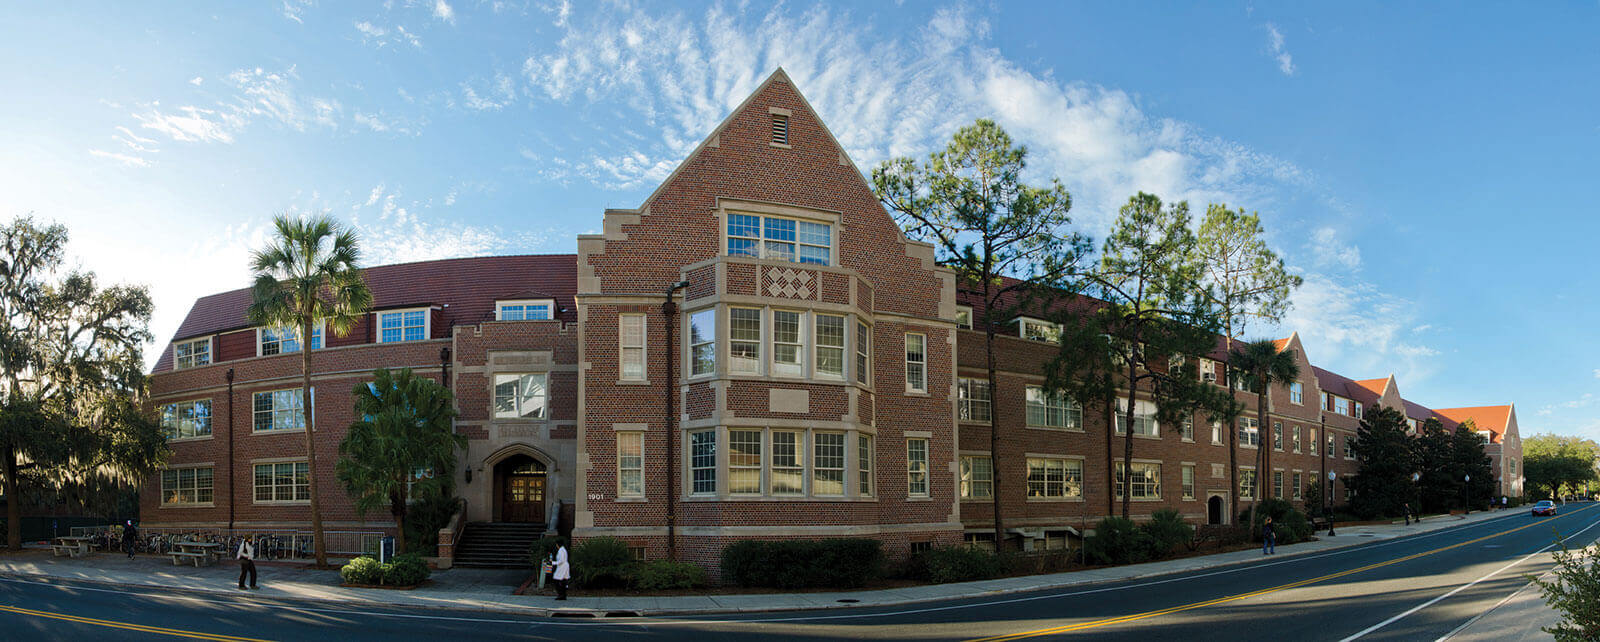 Weil Hall, University of Florida Campus